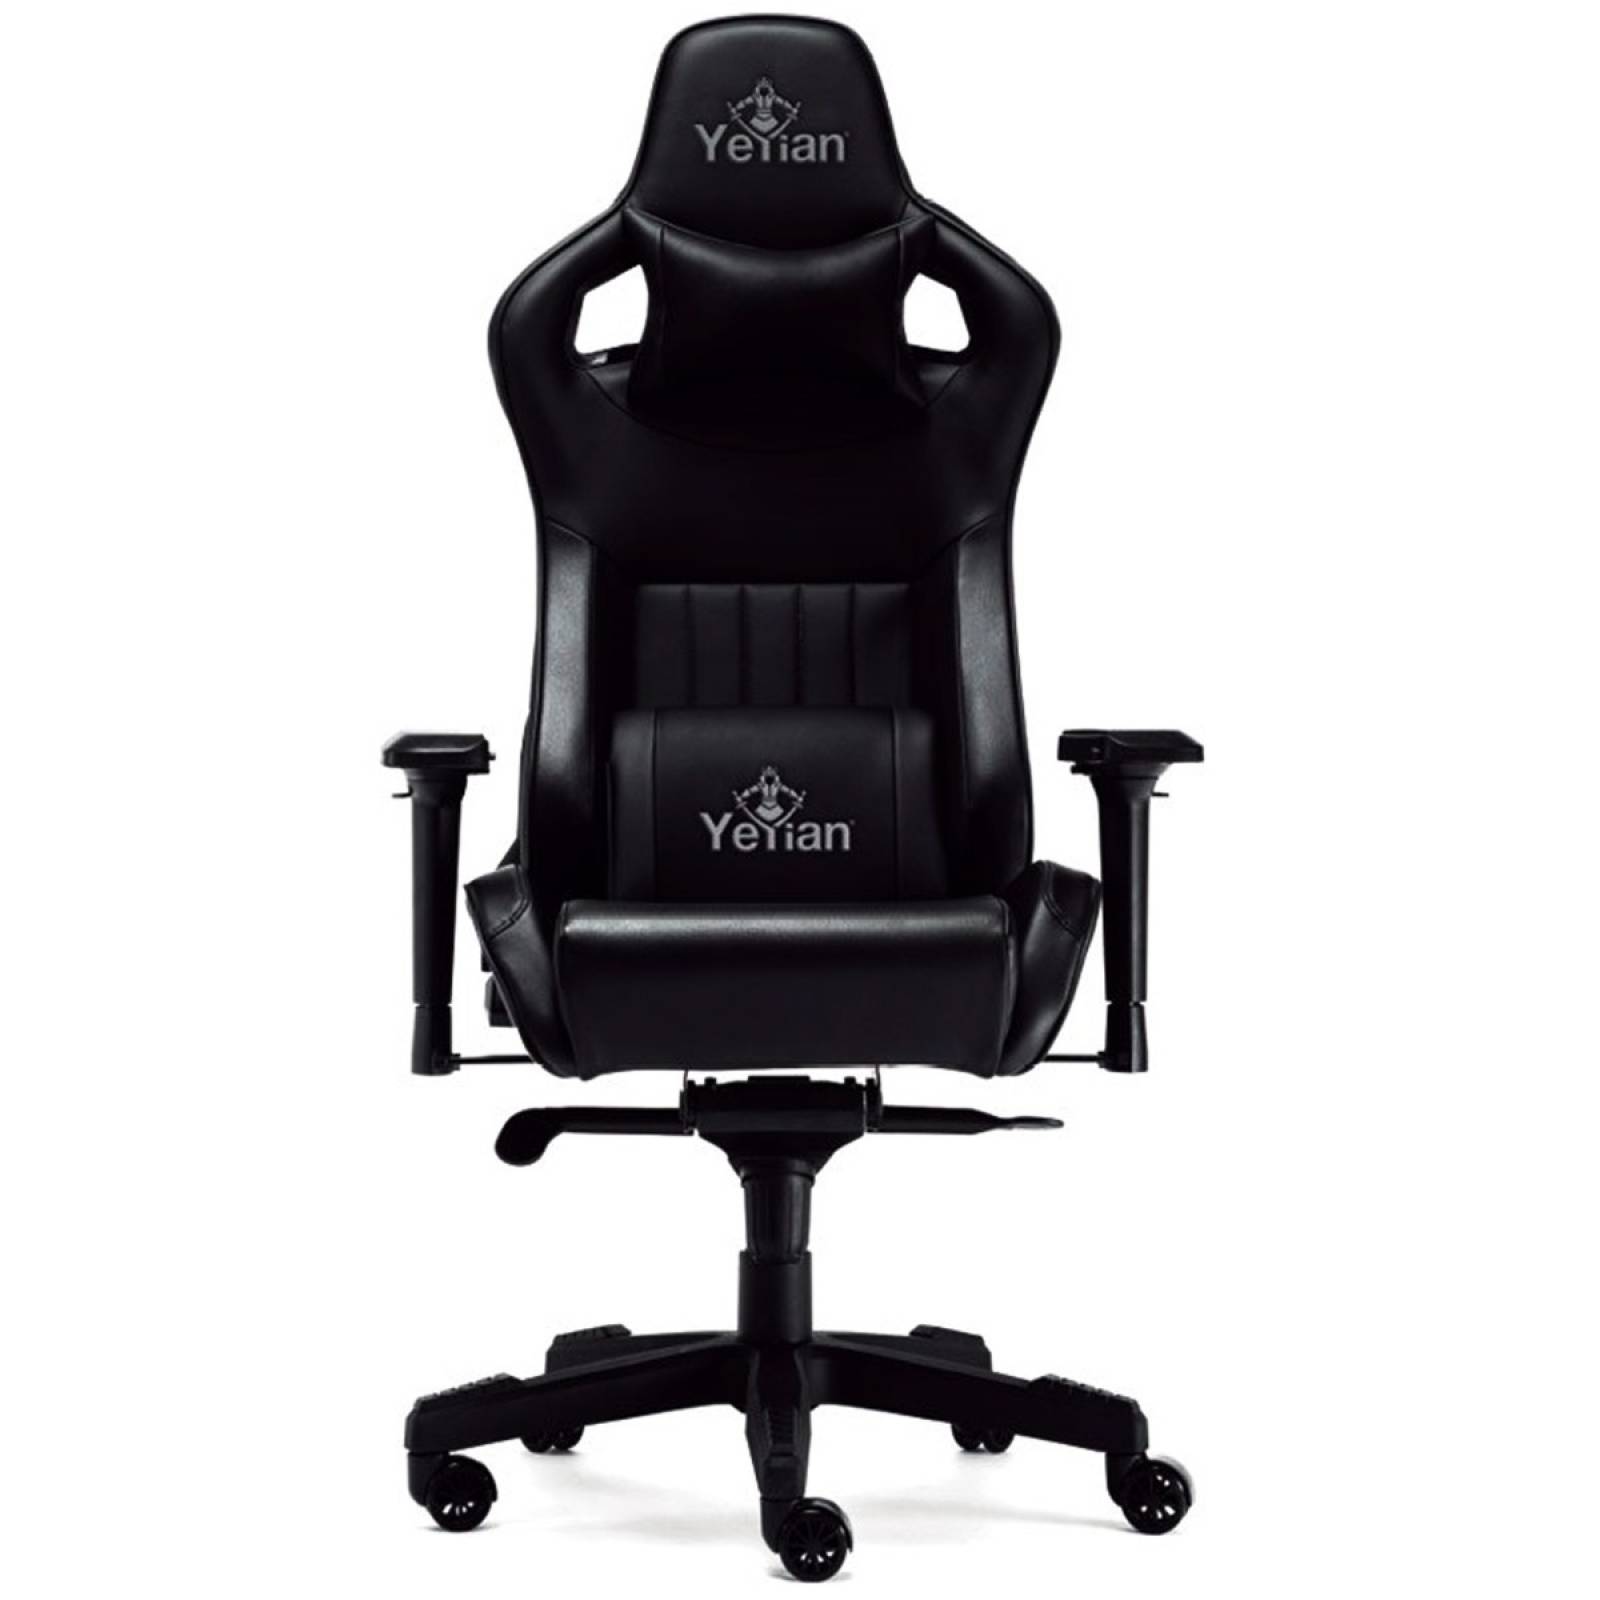 Silla gaming Yeyian cadira 2150, (yar-9015n)